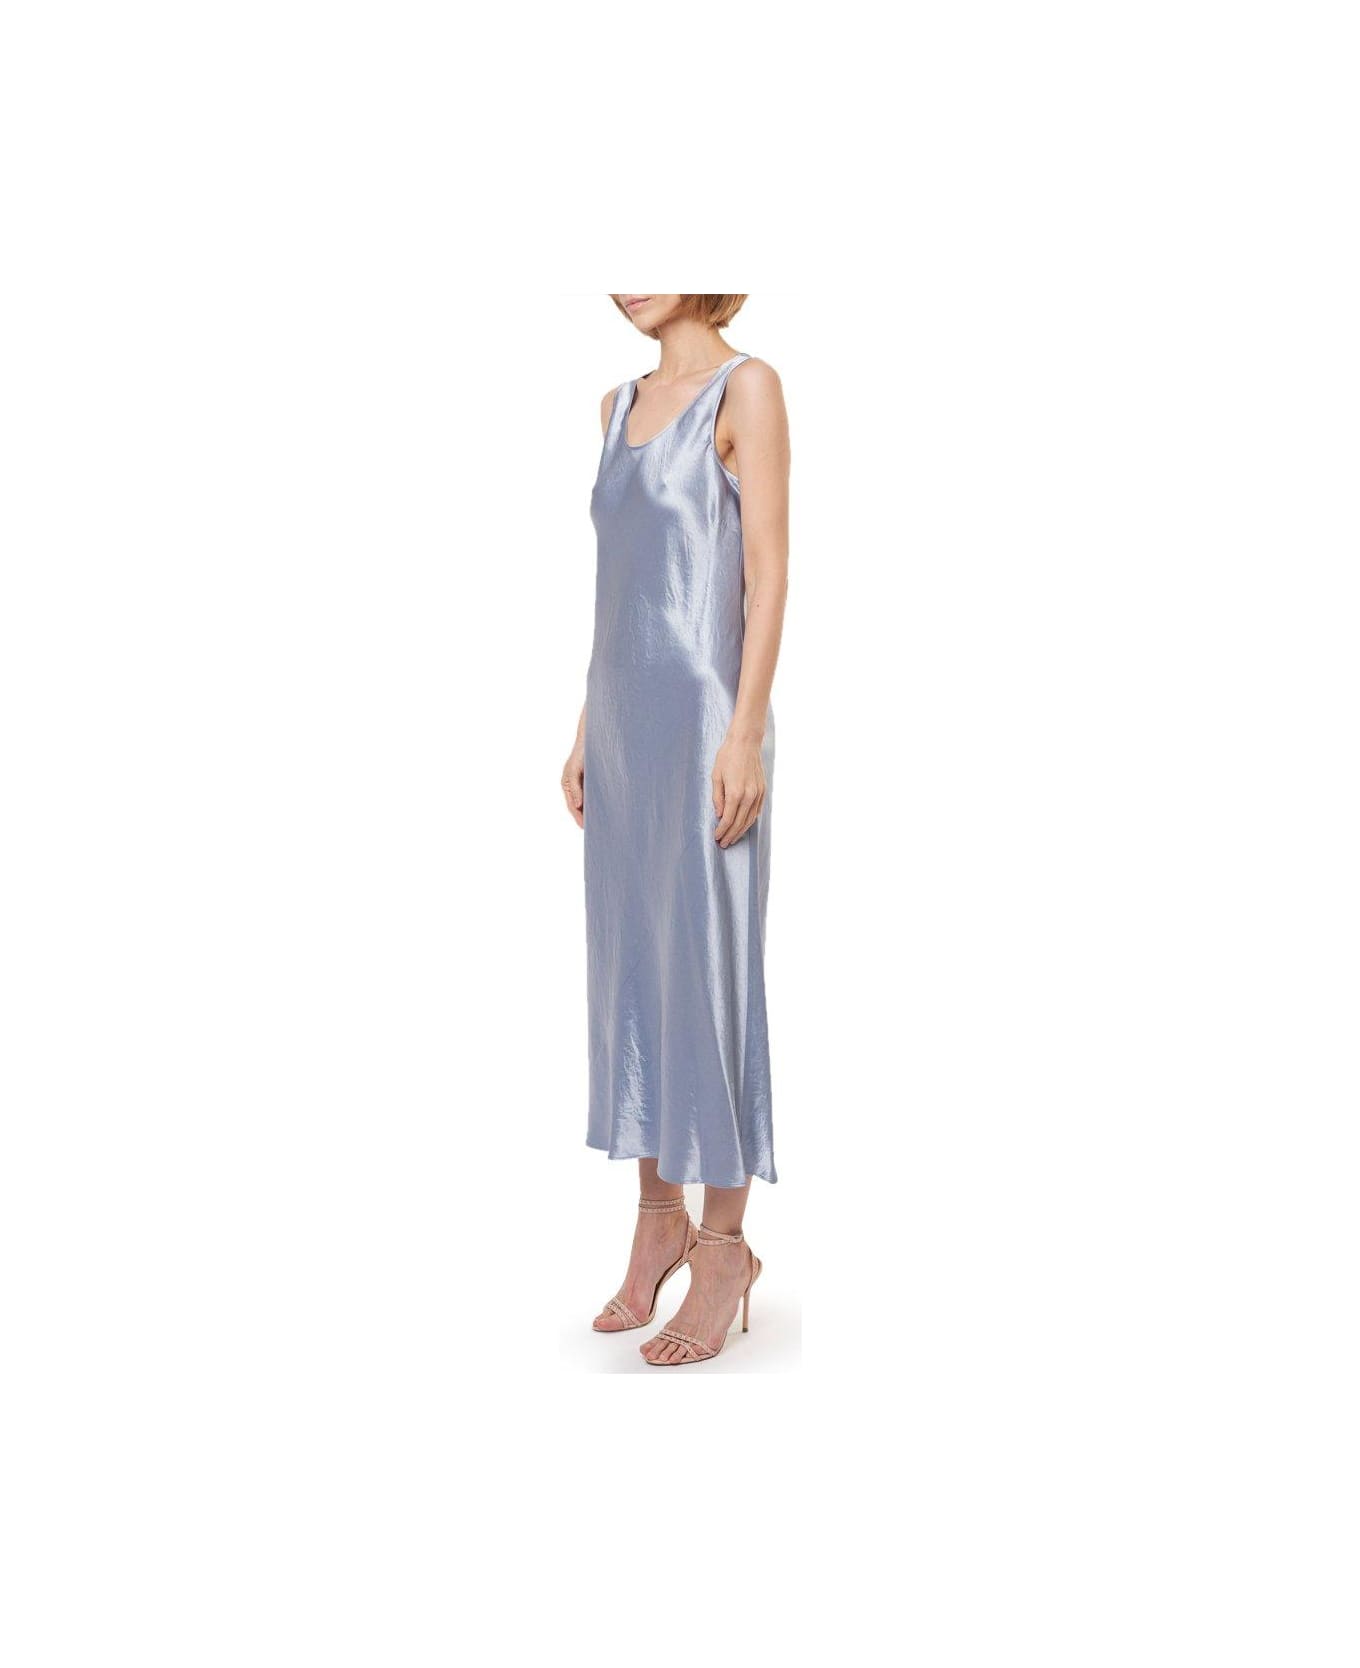 Max Mara Talete Sleeveless Dress - Light blue